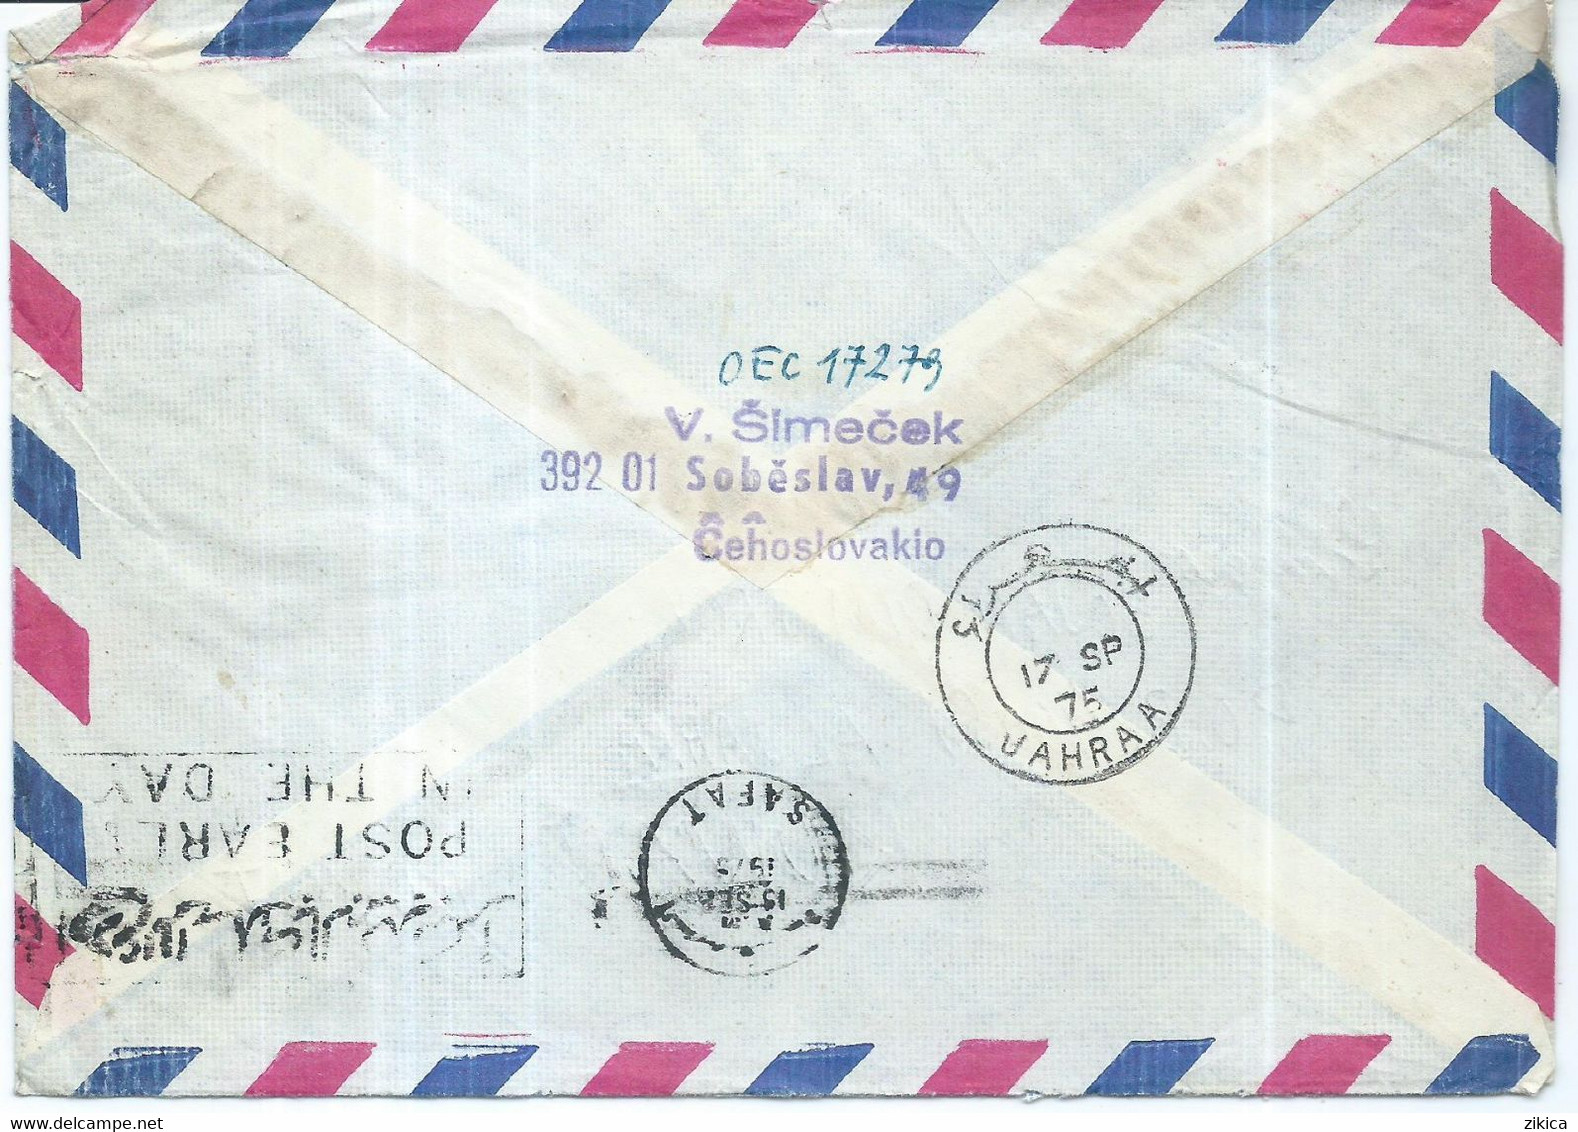 Czechoslovakia AIR MAIL Letter Soběslav 1975 Via Kuwait, - Covers & Documents